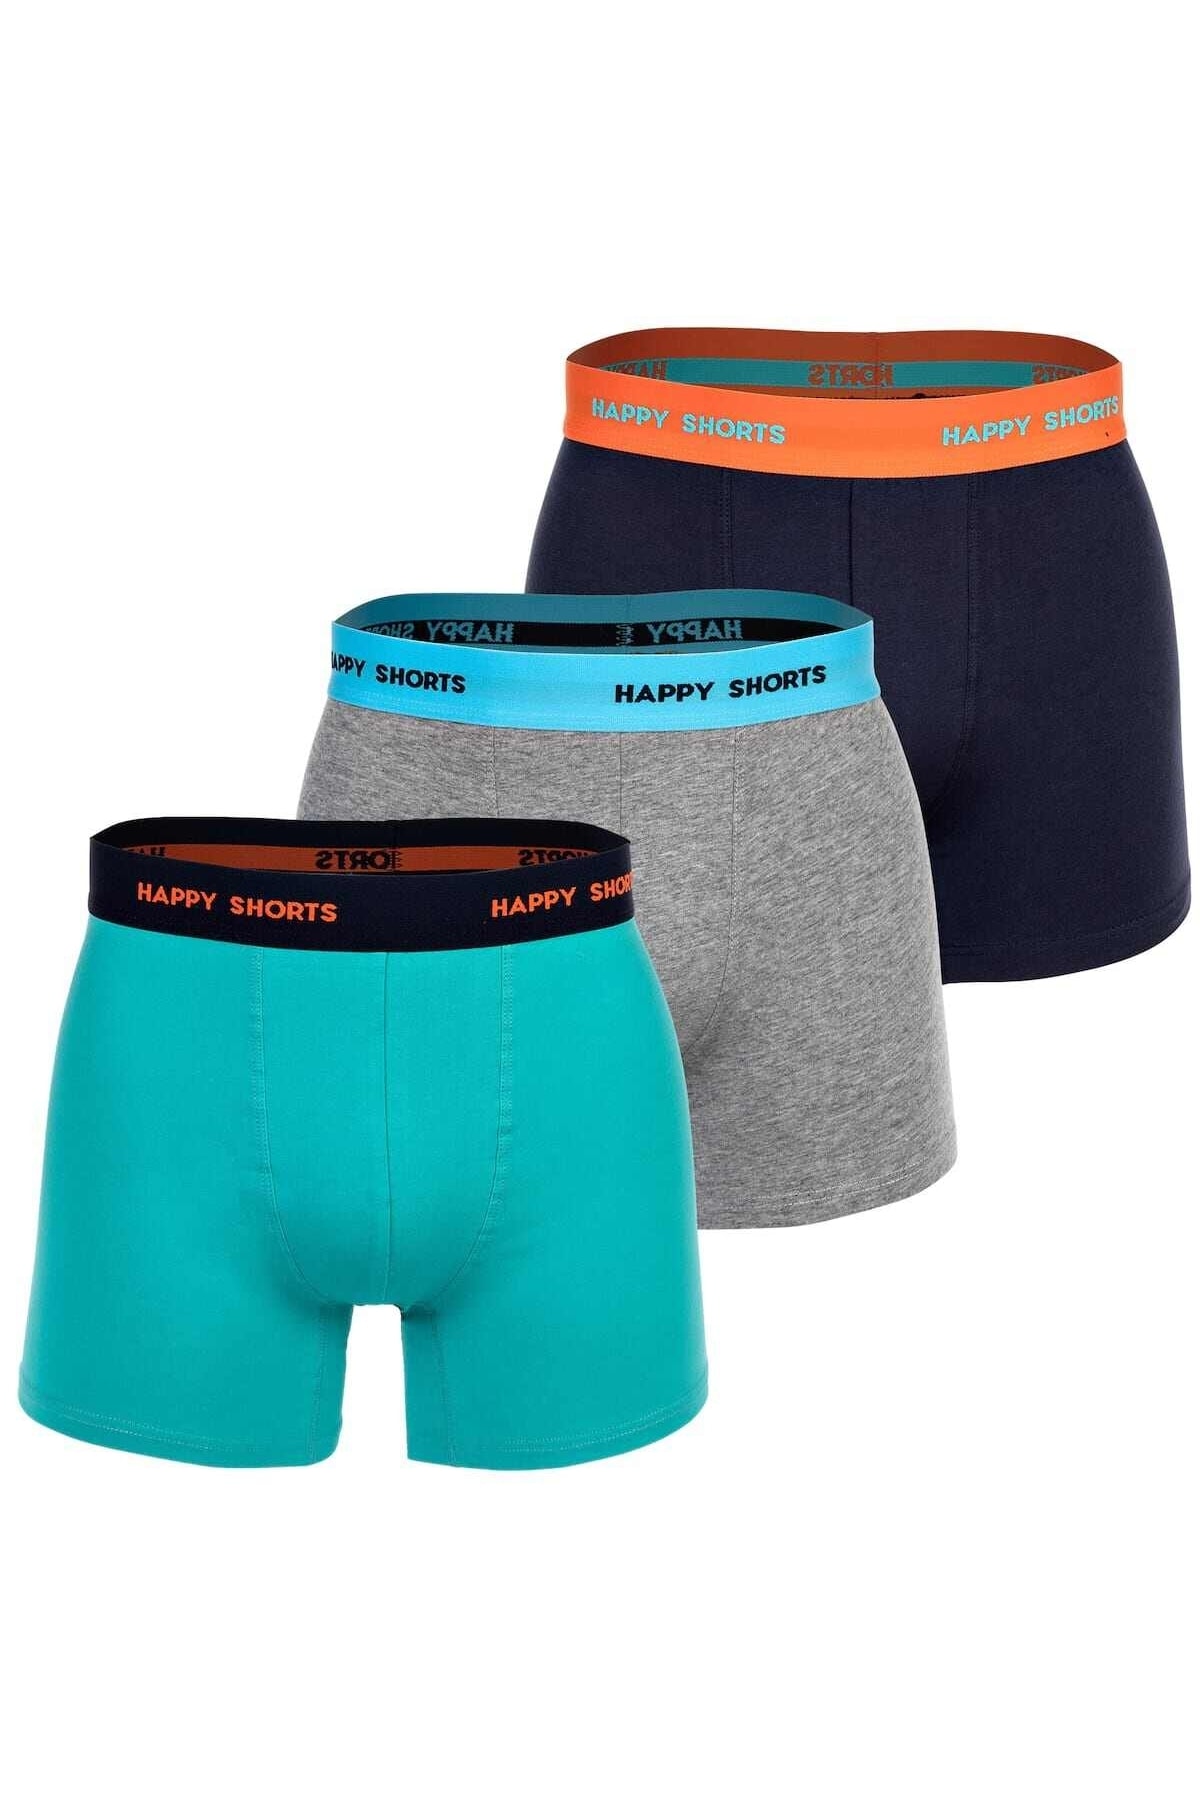 Happy Shorts Boxershorts Mehrfarbig 1 Stück